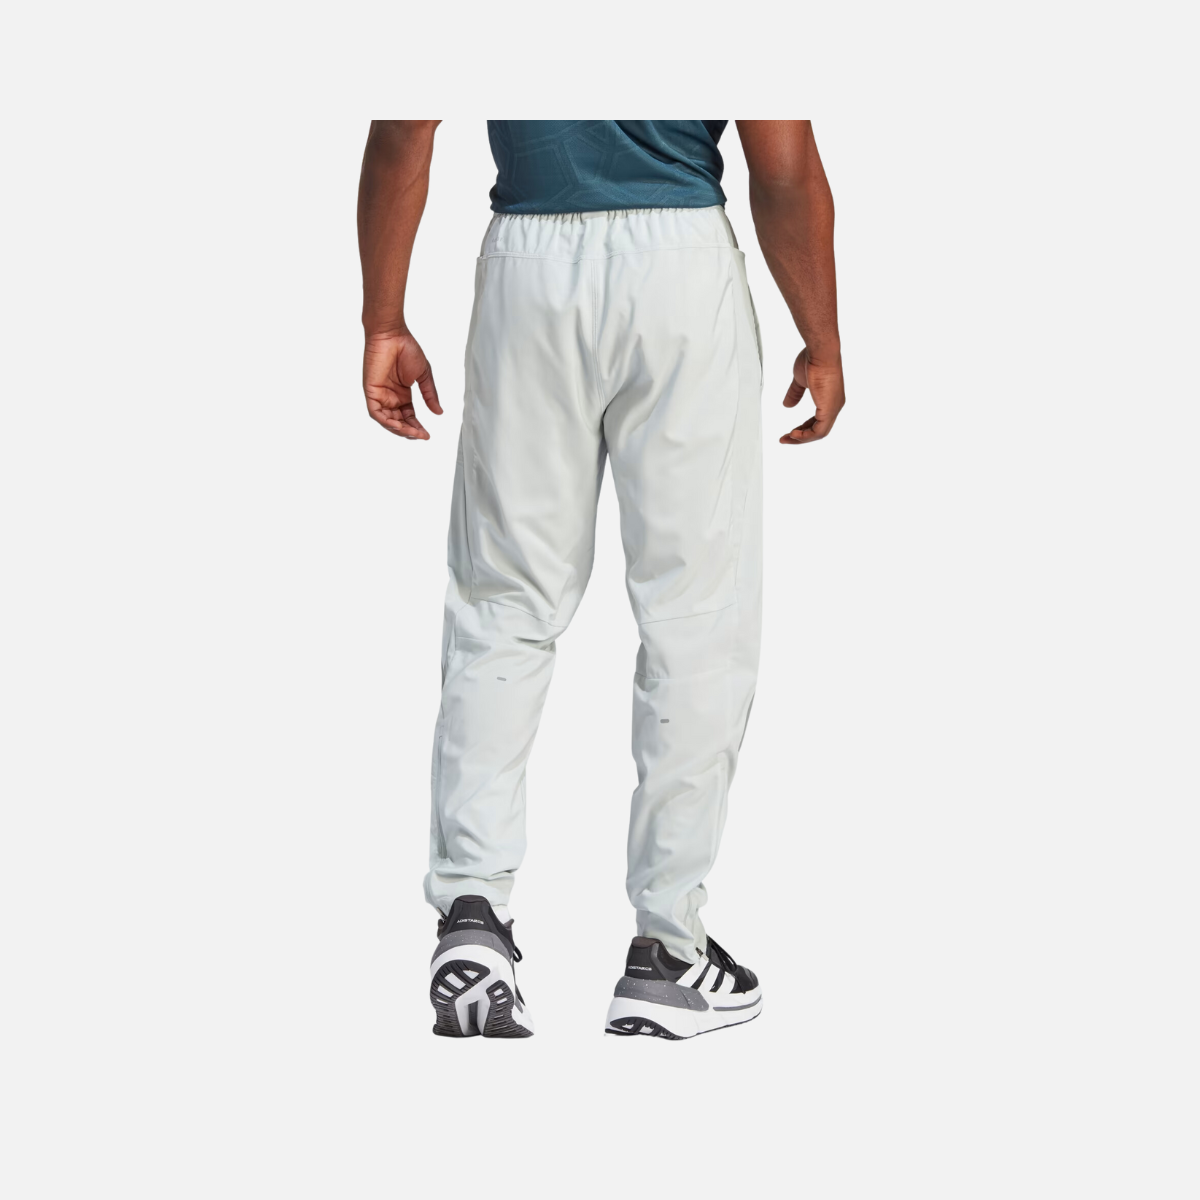 Adidas Own The Run Woven Astro Men's Pant -Wonder Silver